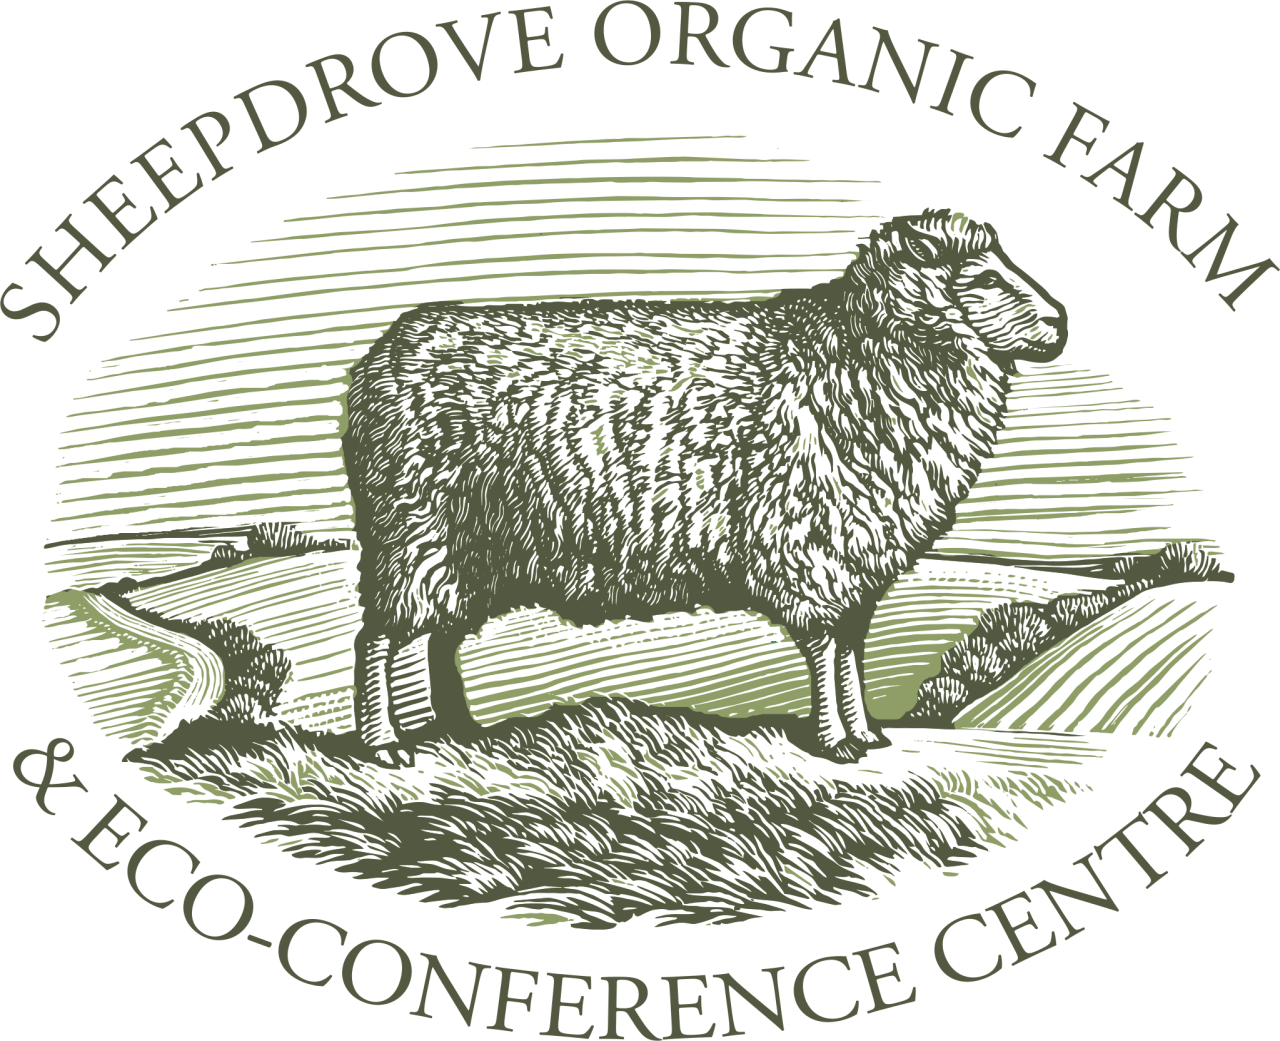 Sheepdrove Organic Farm